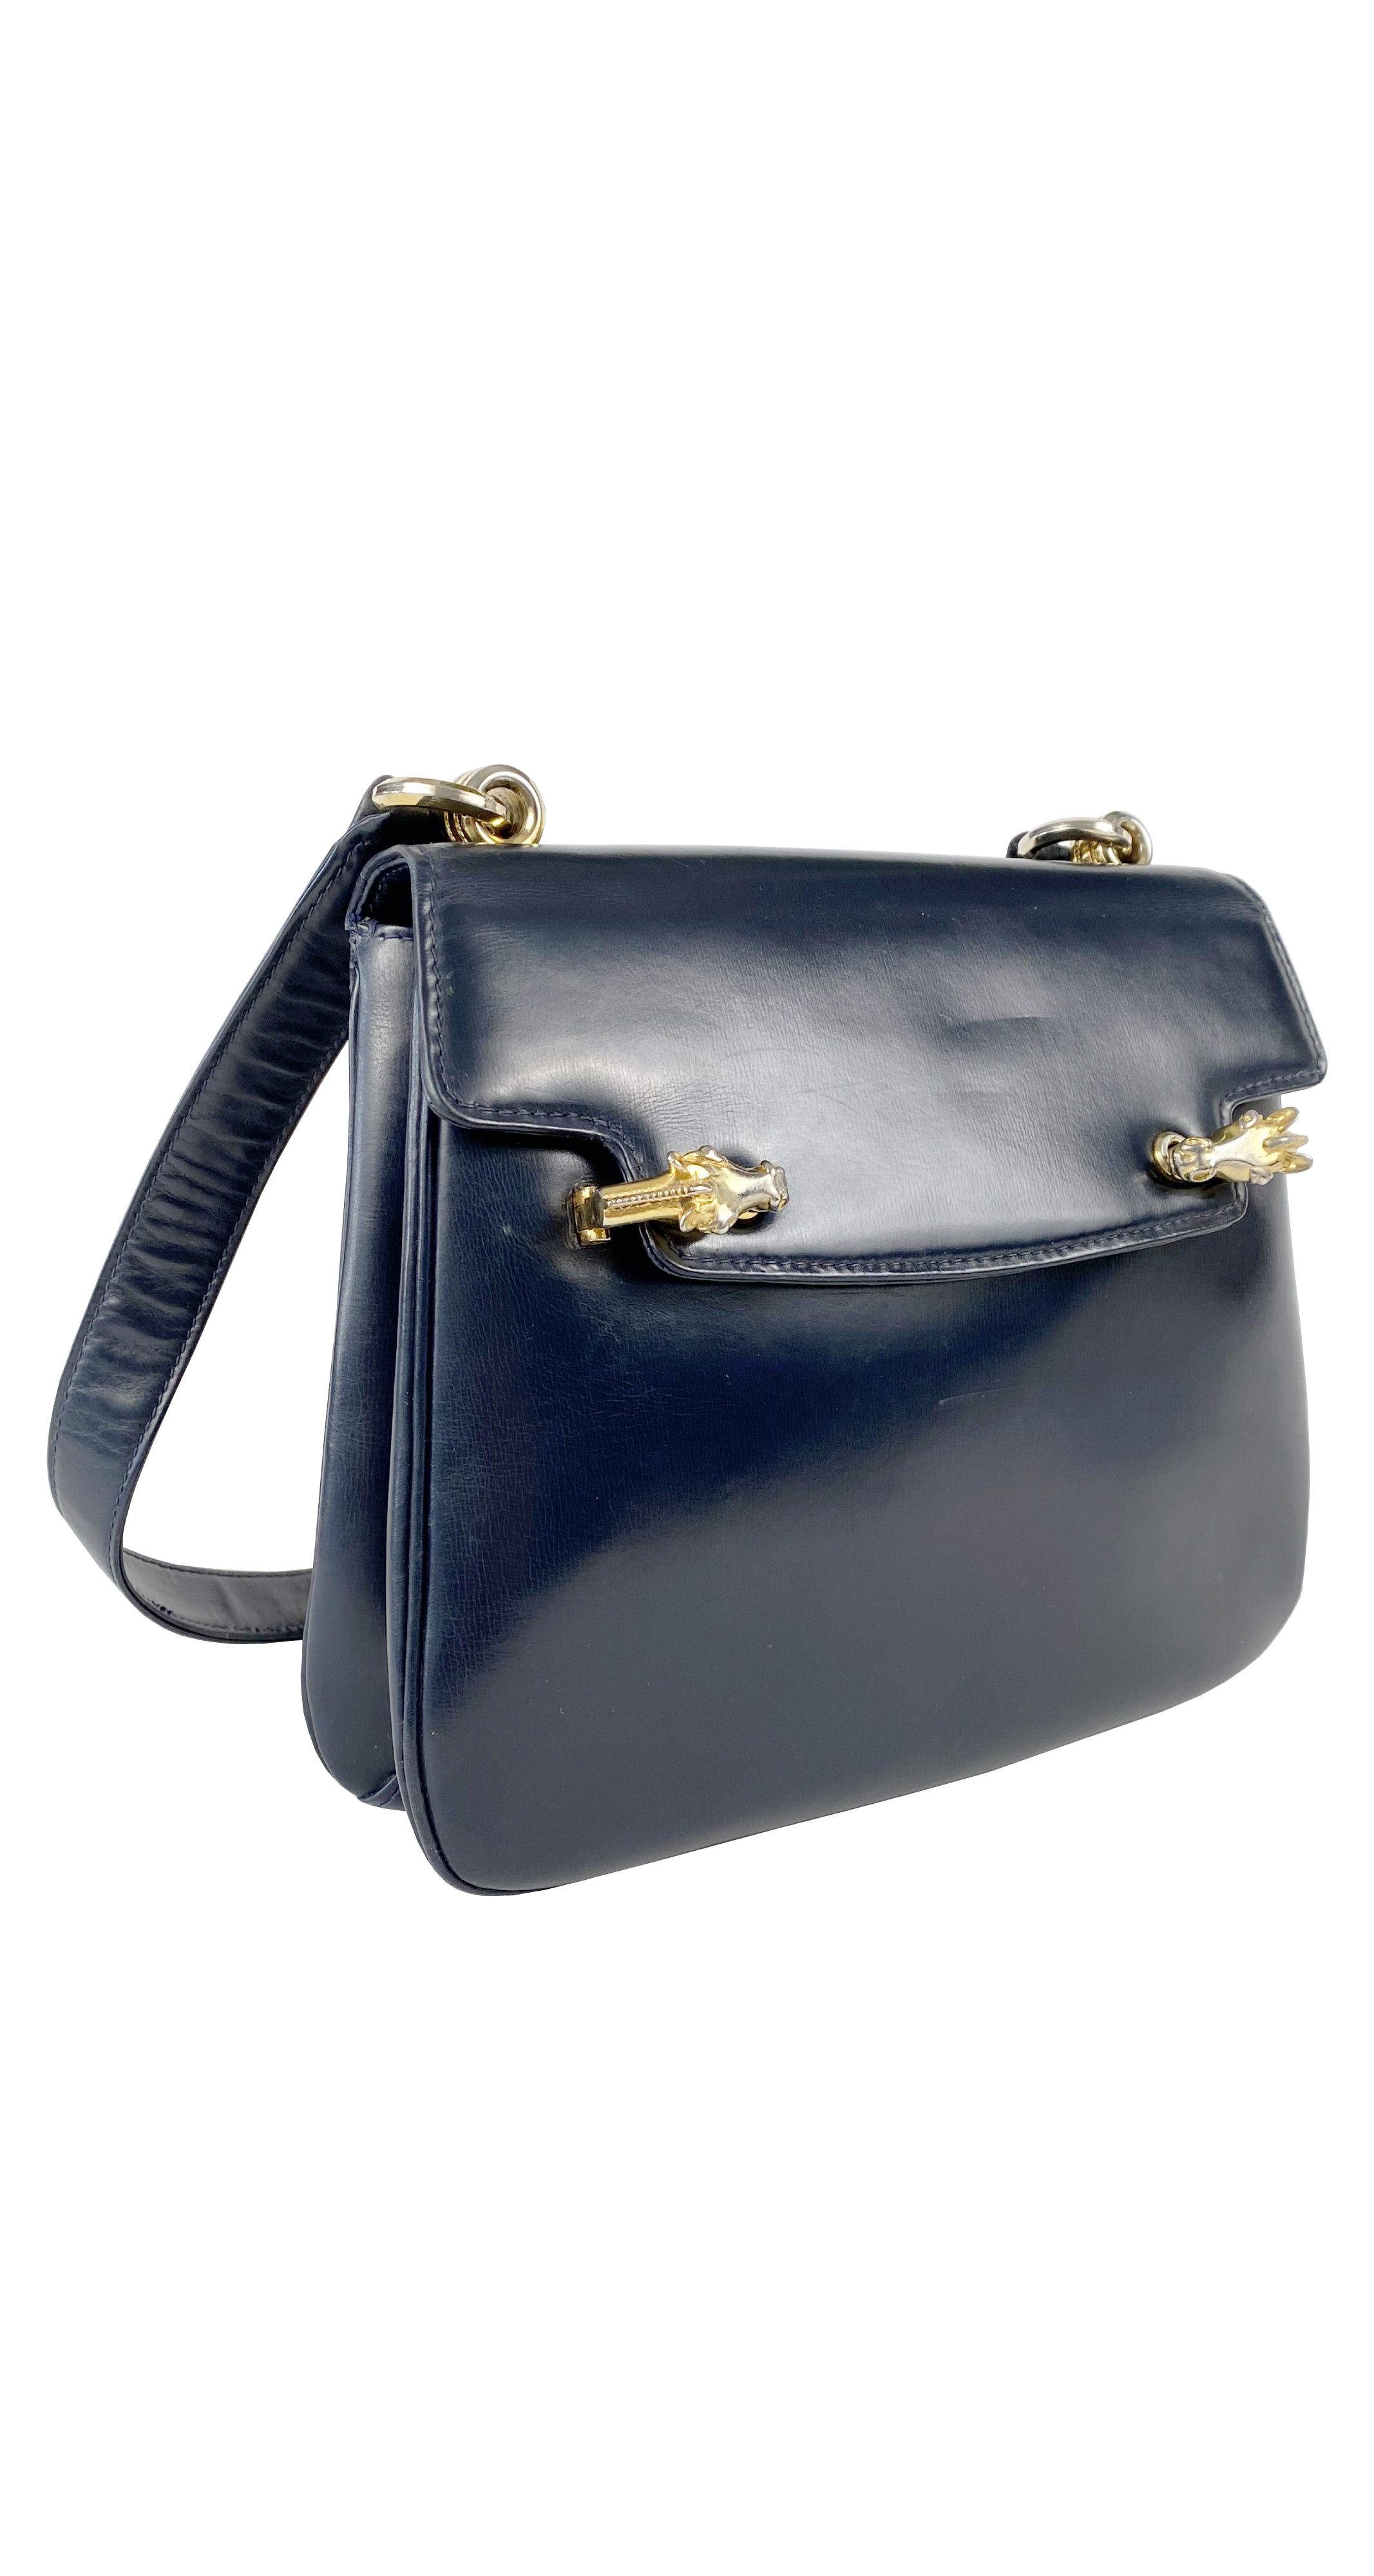 Gucci Vintage Two-tone Leather Handbag Auction